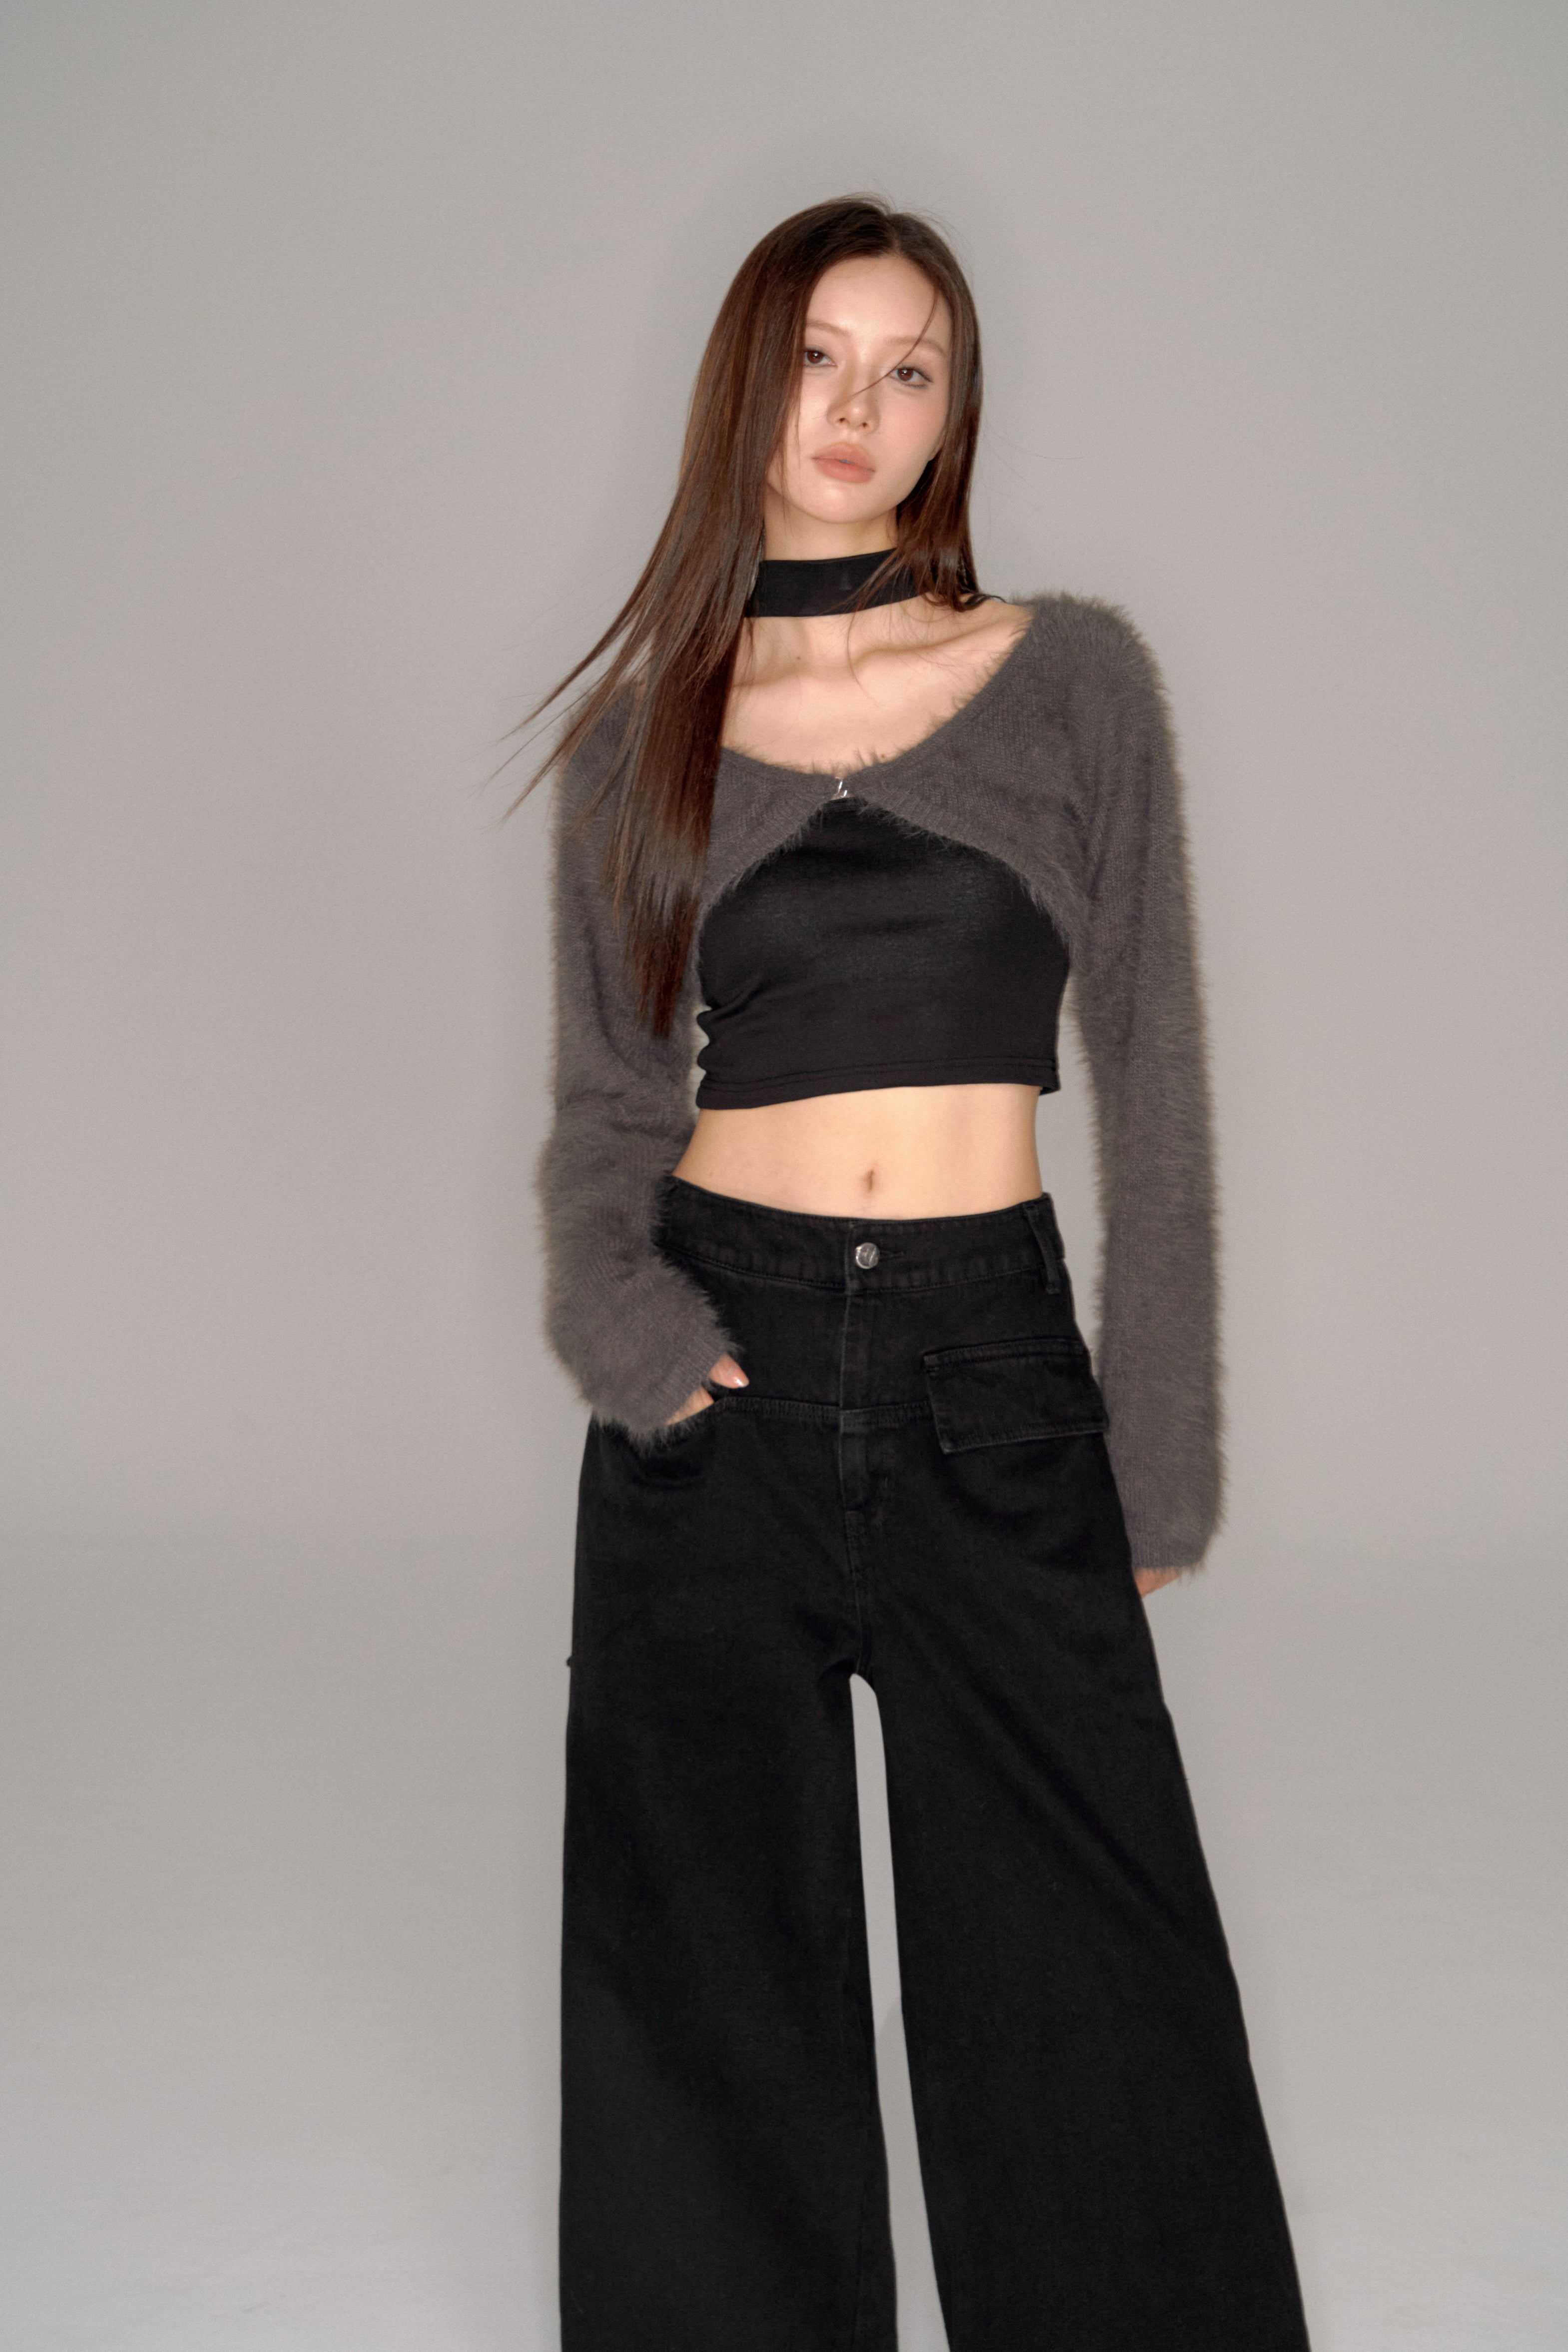 andwang shaggy cropped cardigan set